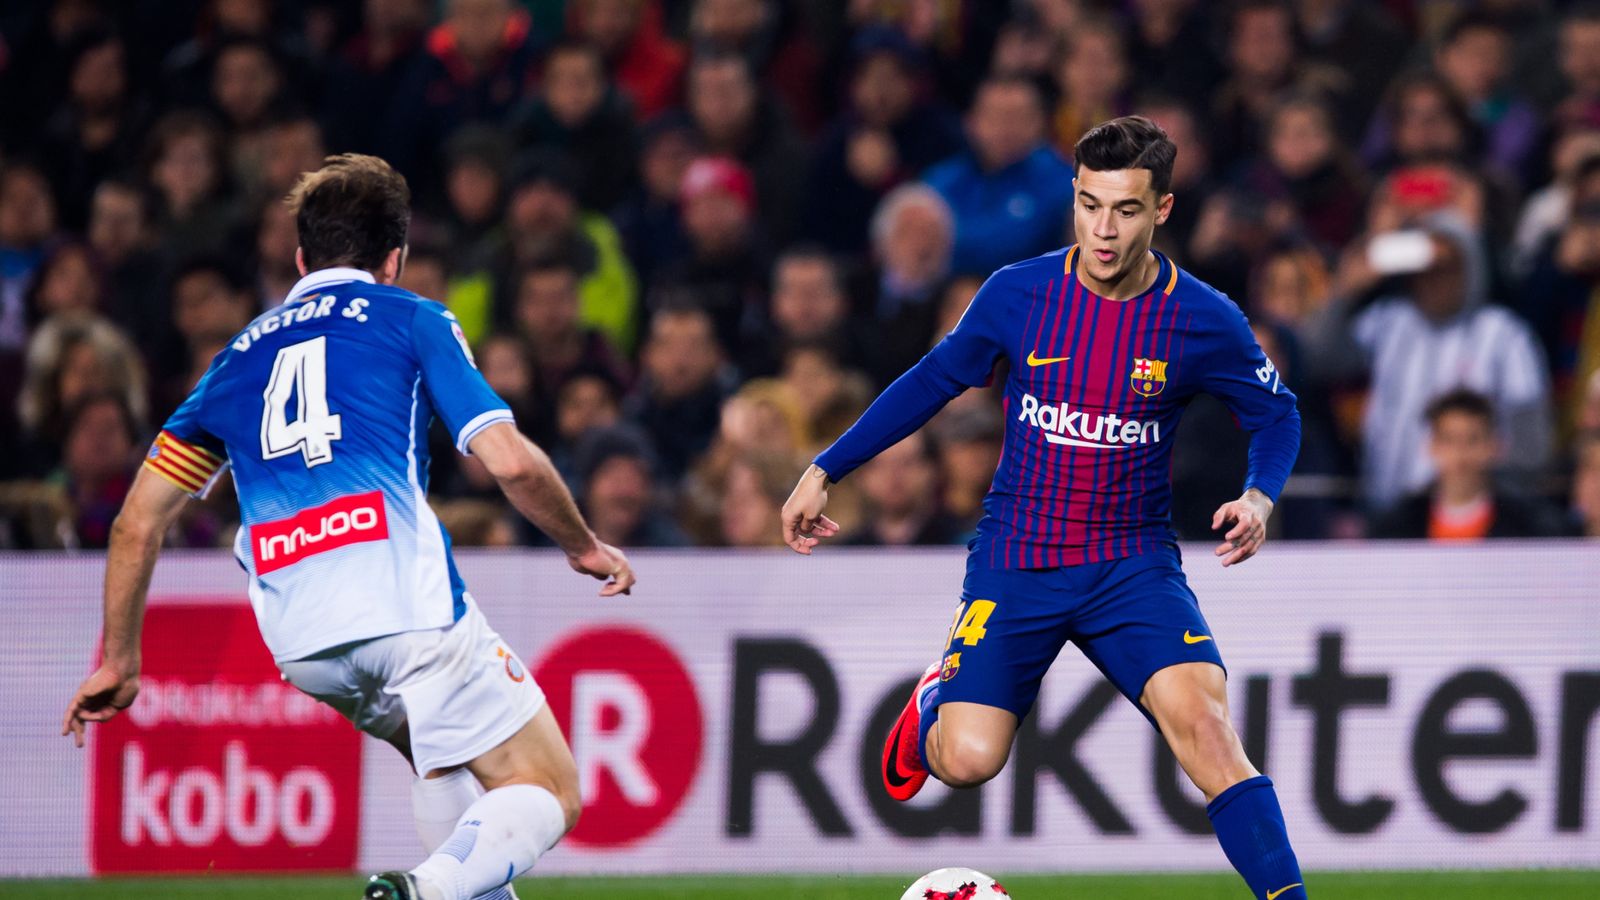 Barcelona 2 - 0 Espanyol - Match Report & Highlights